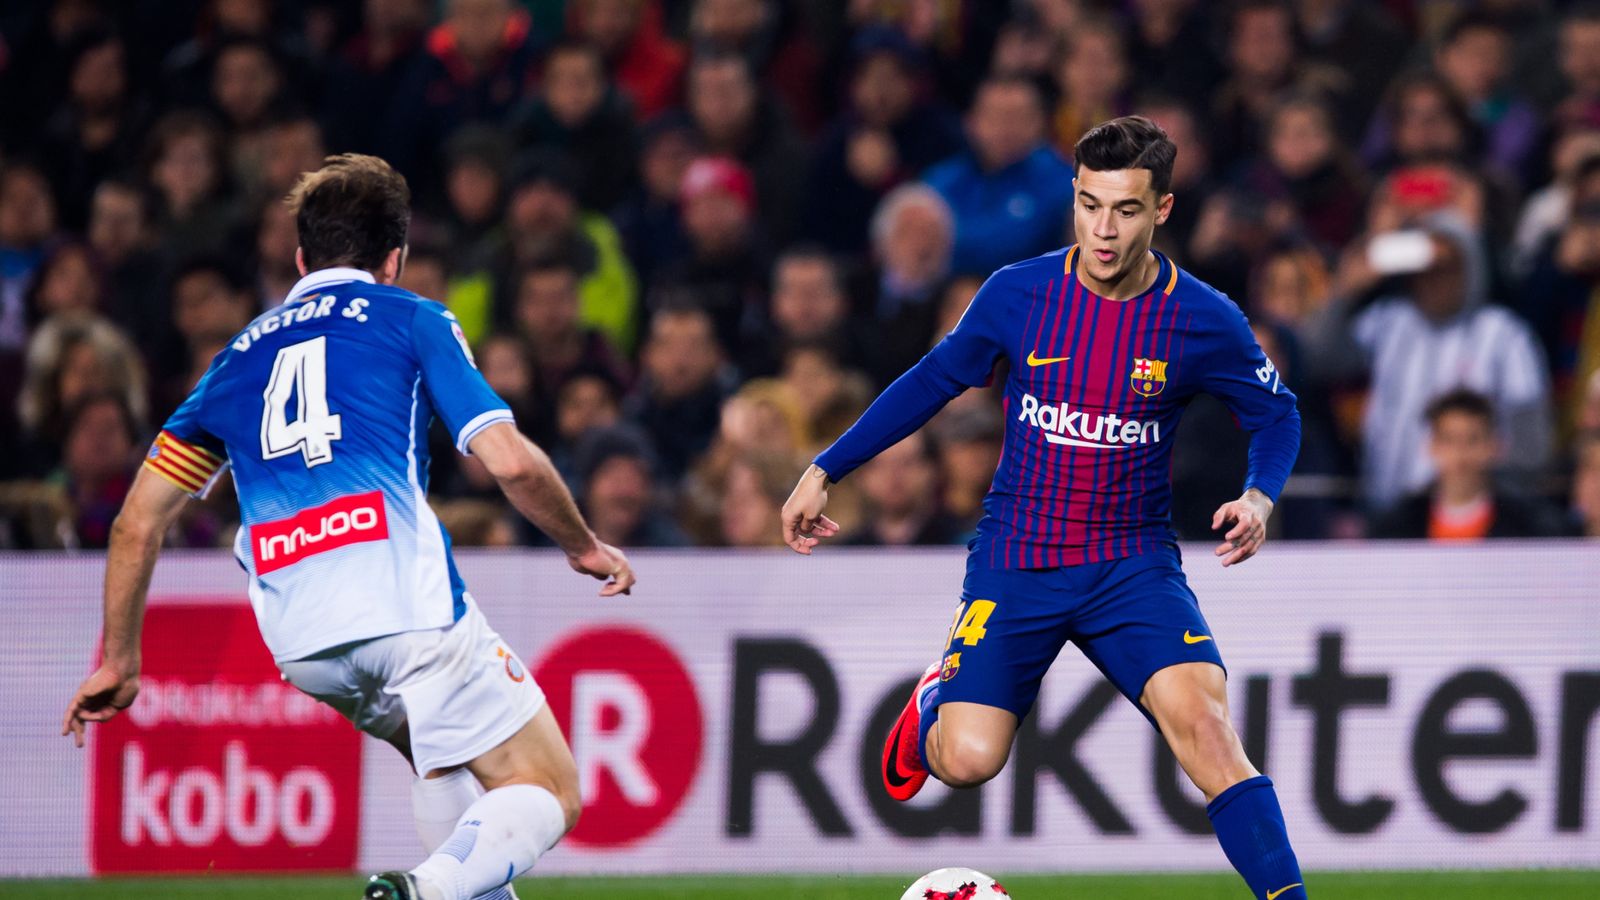 Barcelona 2 - 0 Espanyol - Match Report & Highlights